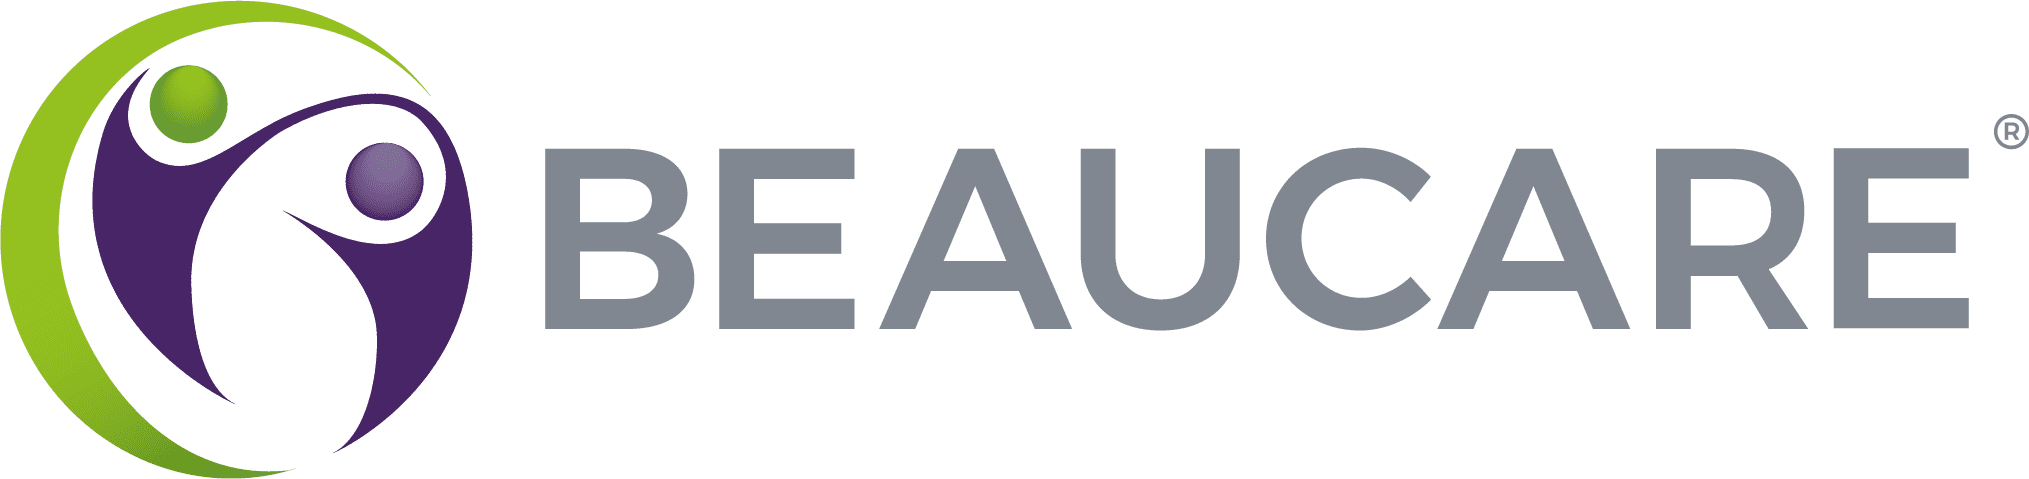 Beaucare logo